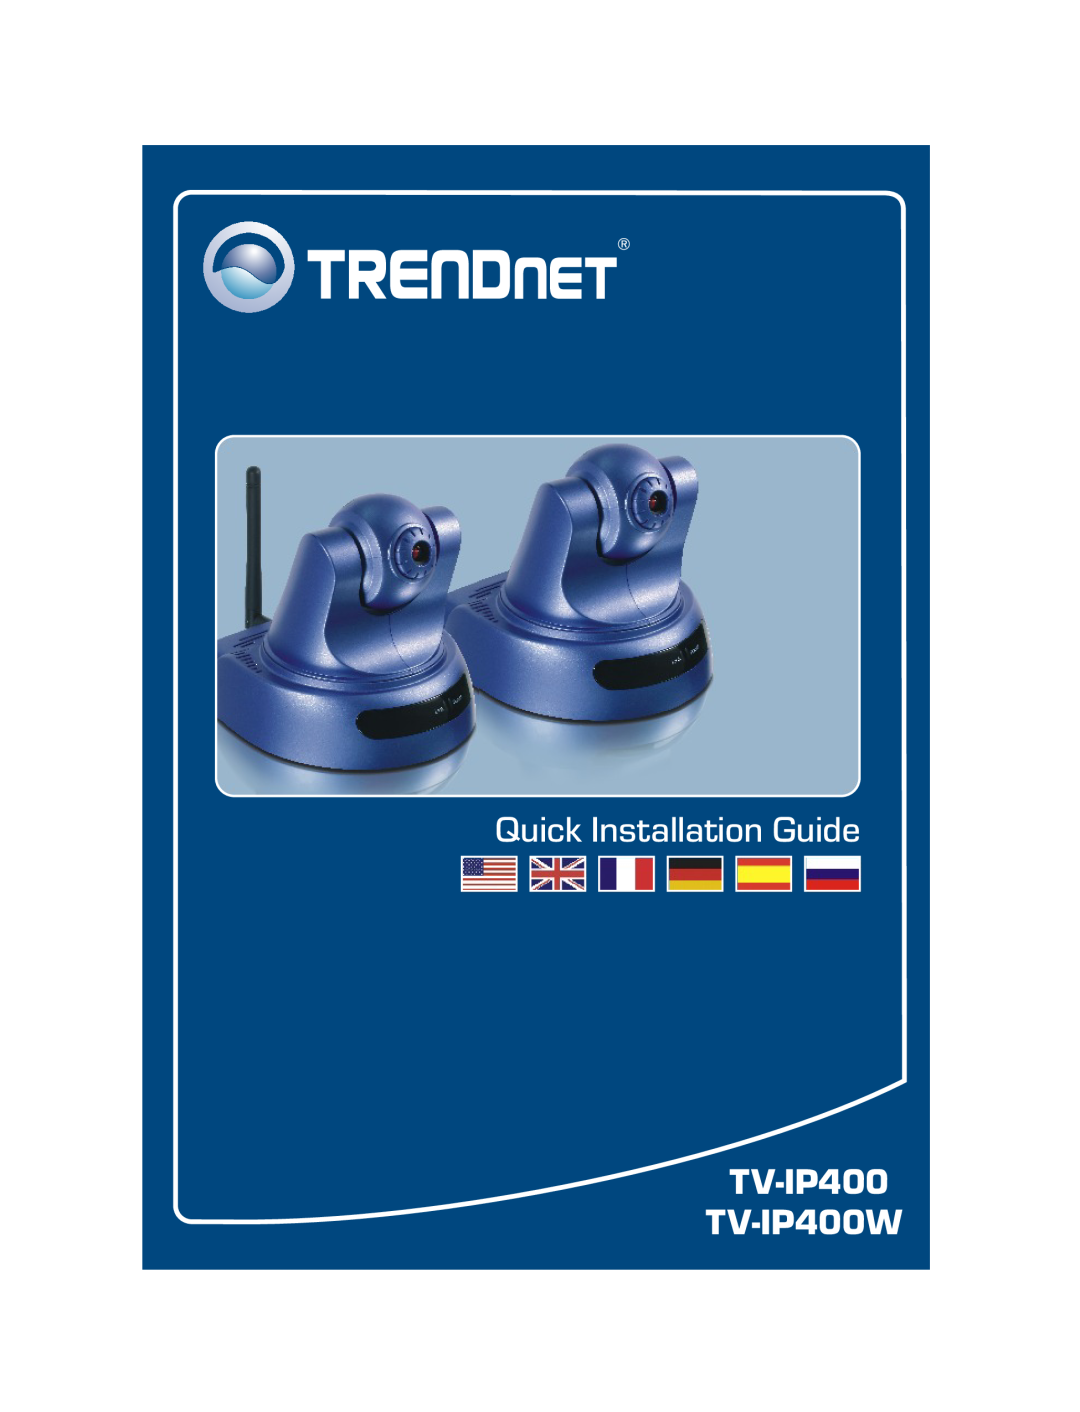 TRENDnet TRENDNET, tv-ip400 manual Quick Installation Guide, TV-IP400 TV-IP400W 